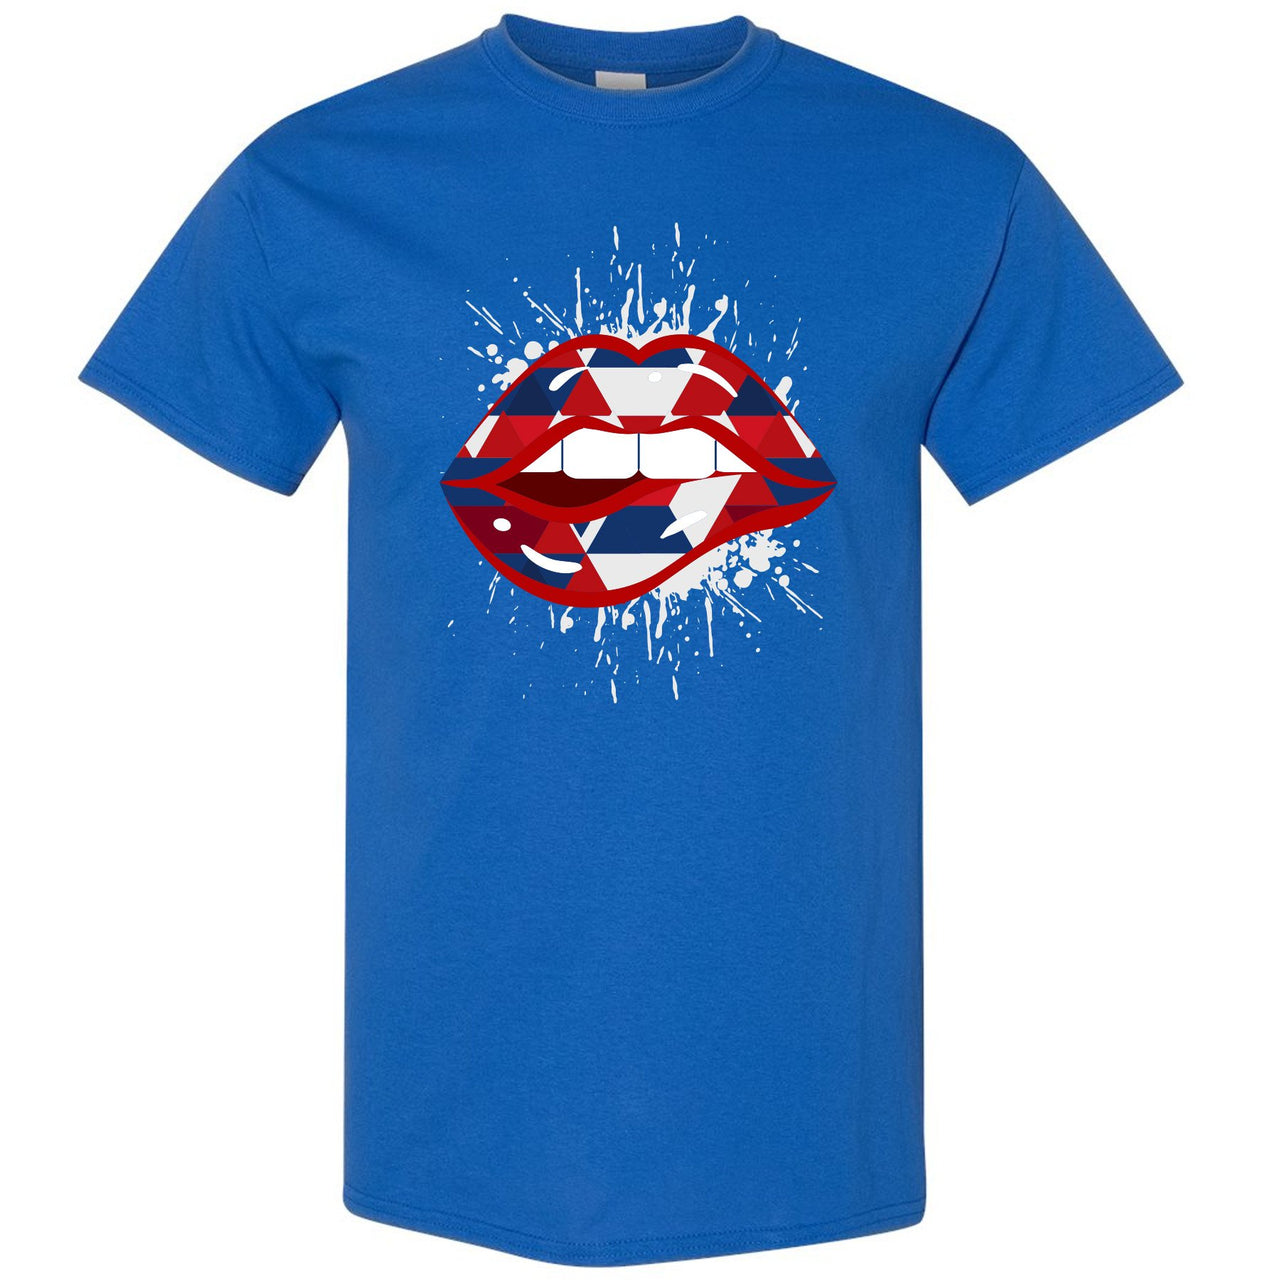 USA One Foams T Shirt | Geometric Lips Splatter, Royal Blue